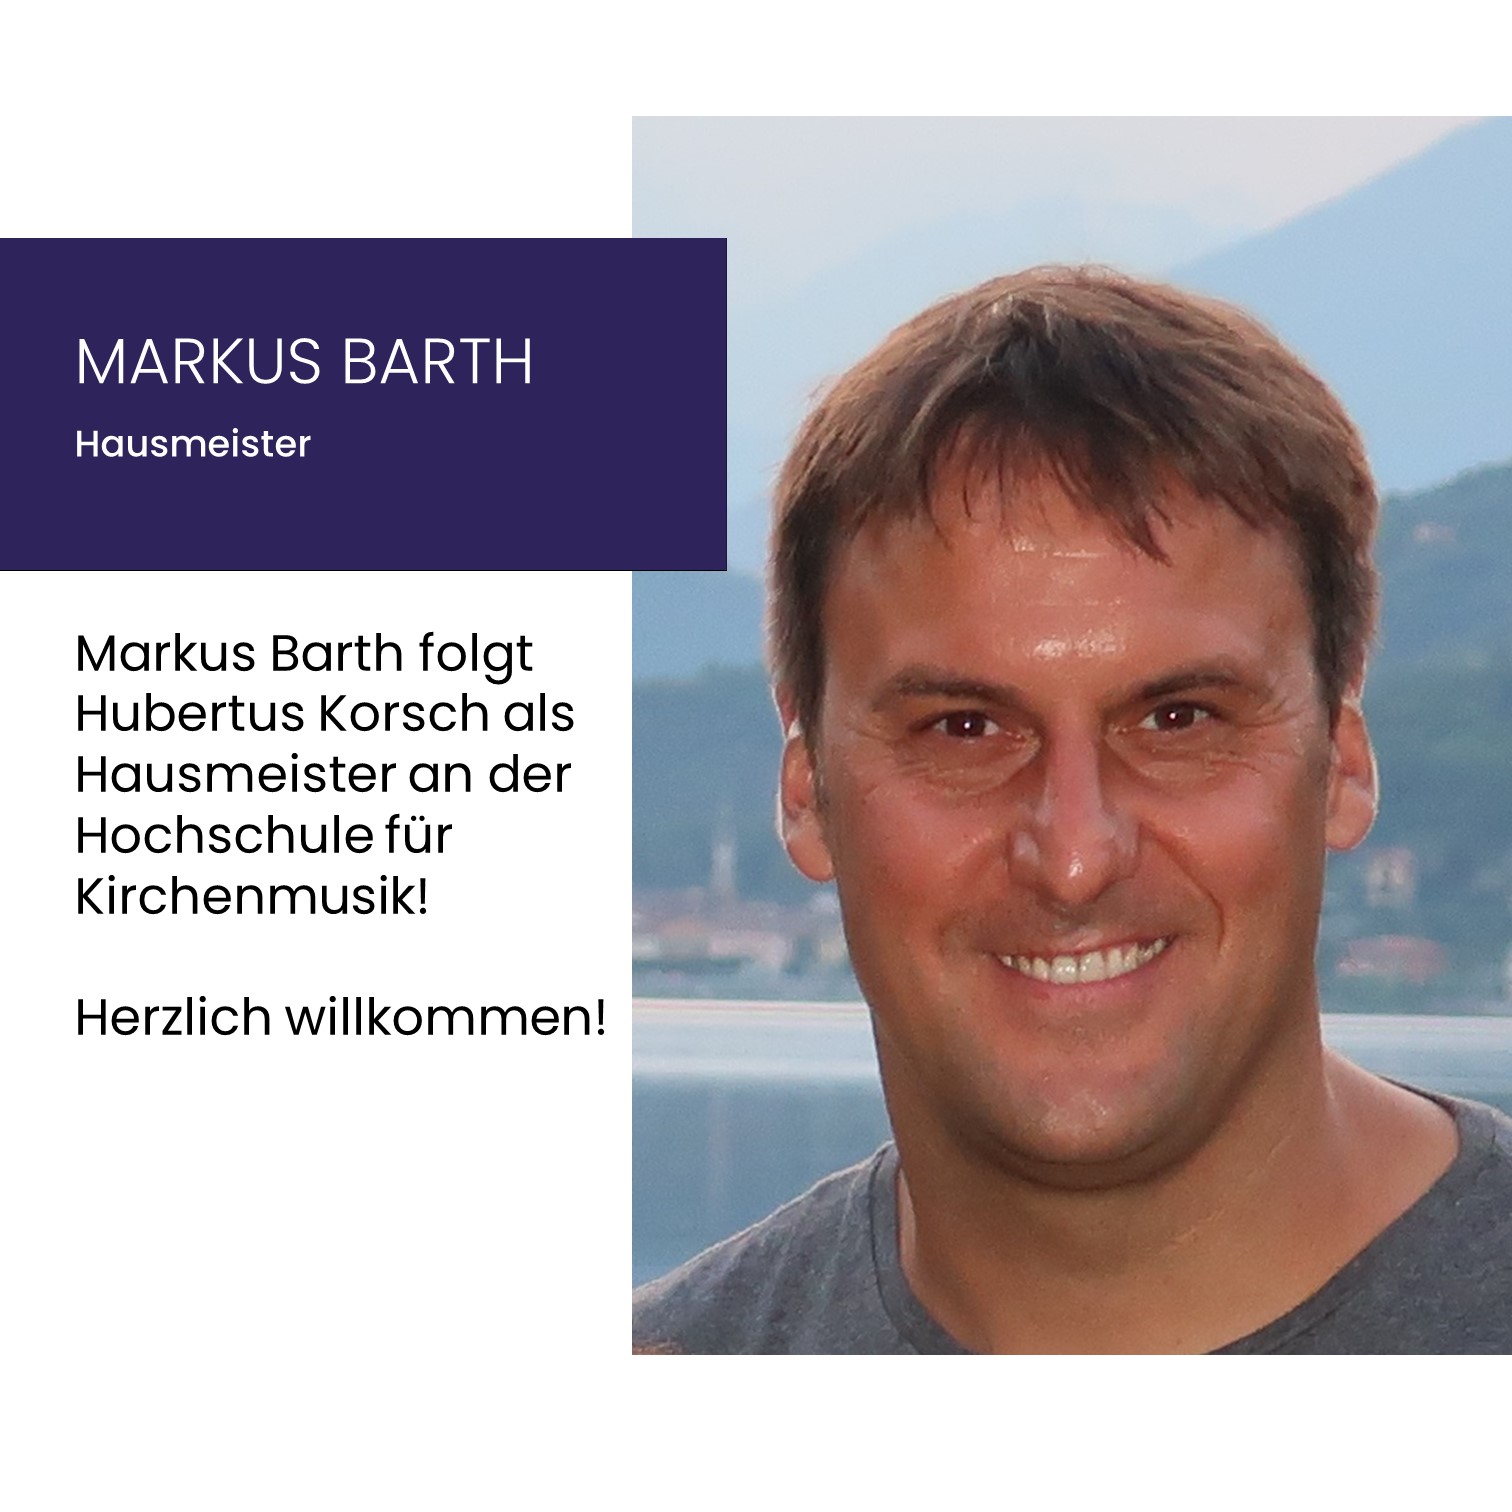 Markus Barth folgt Hubertus Korsch